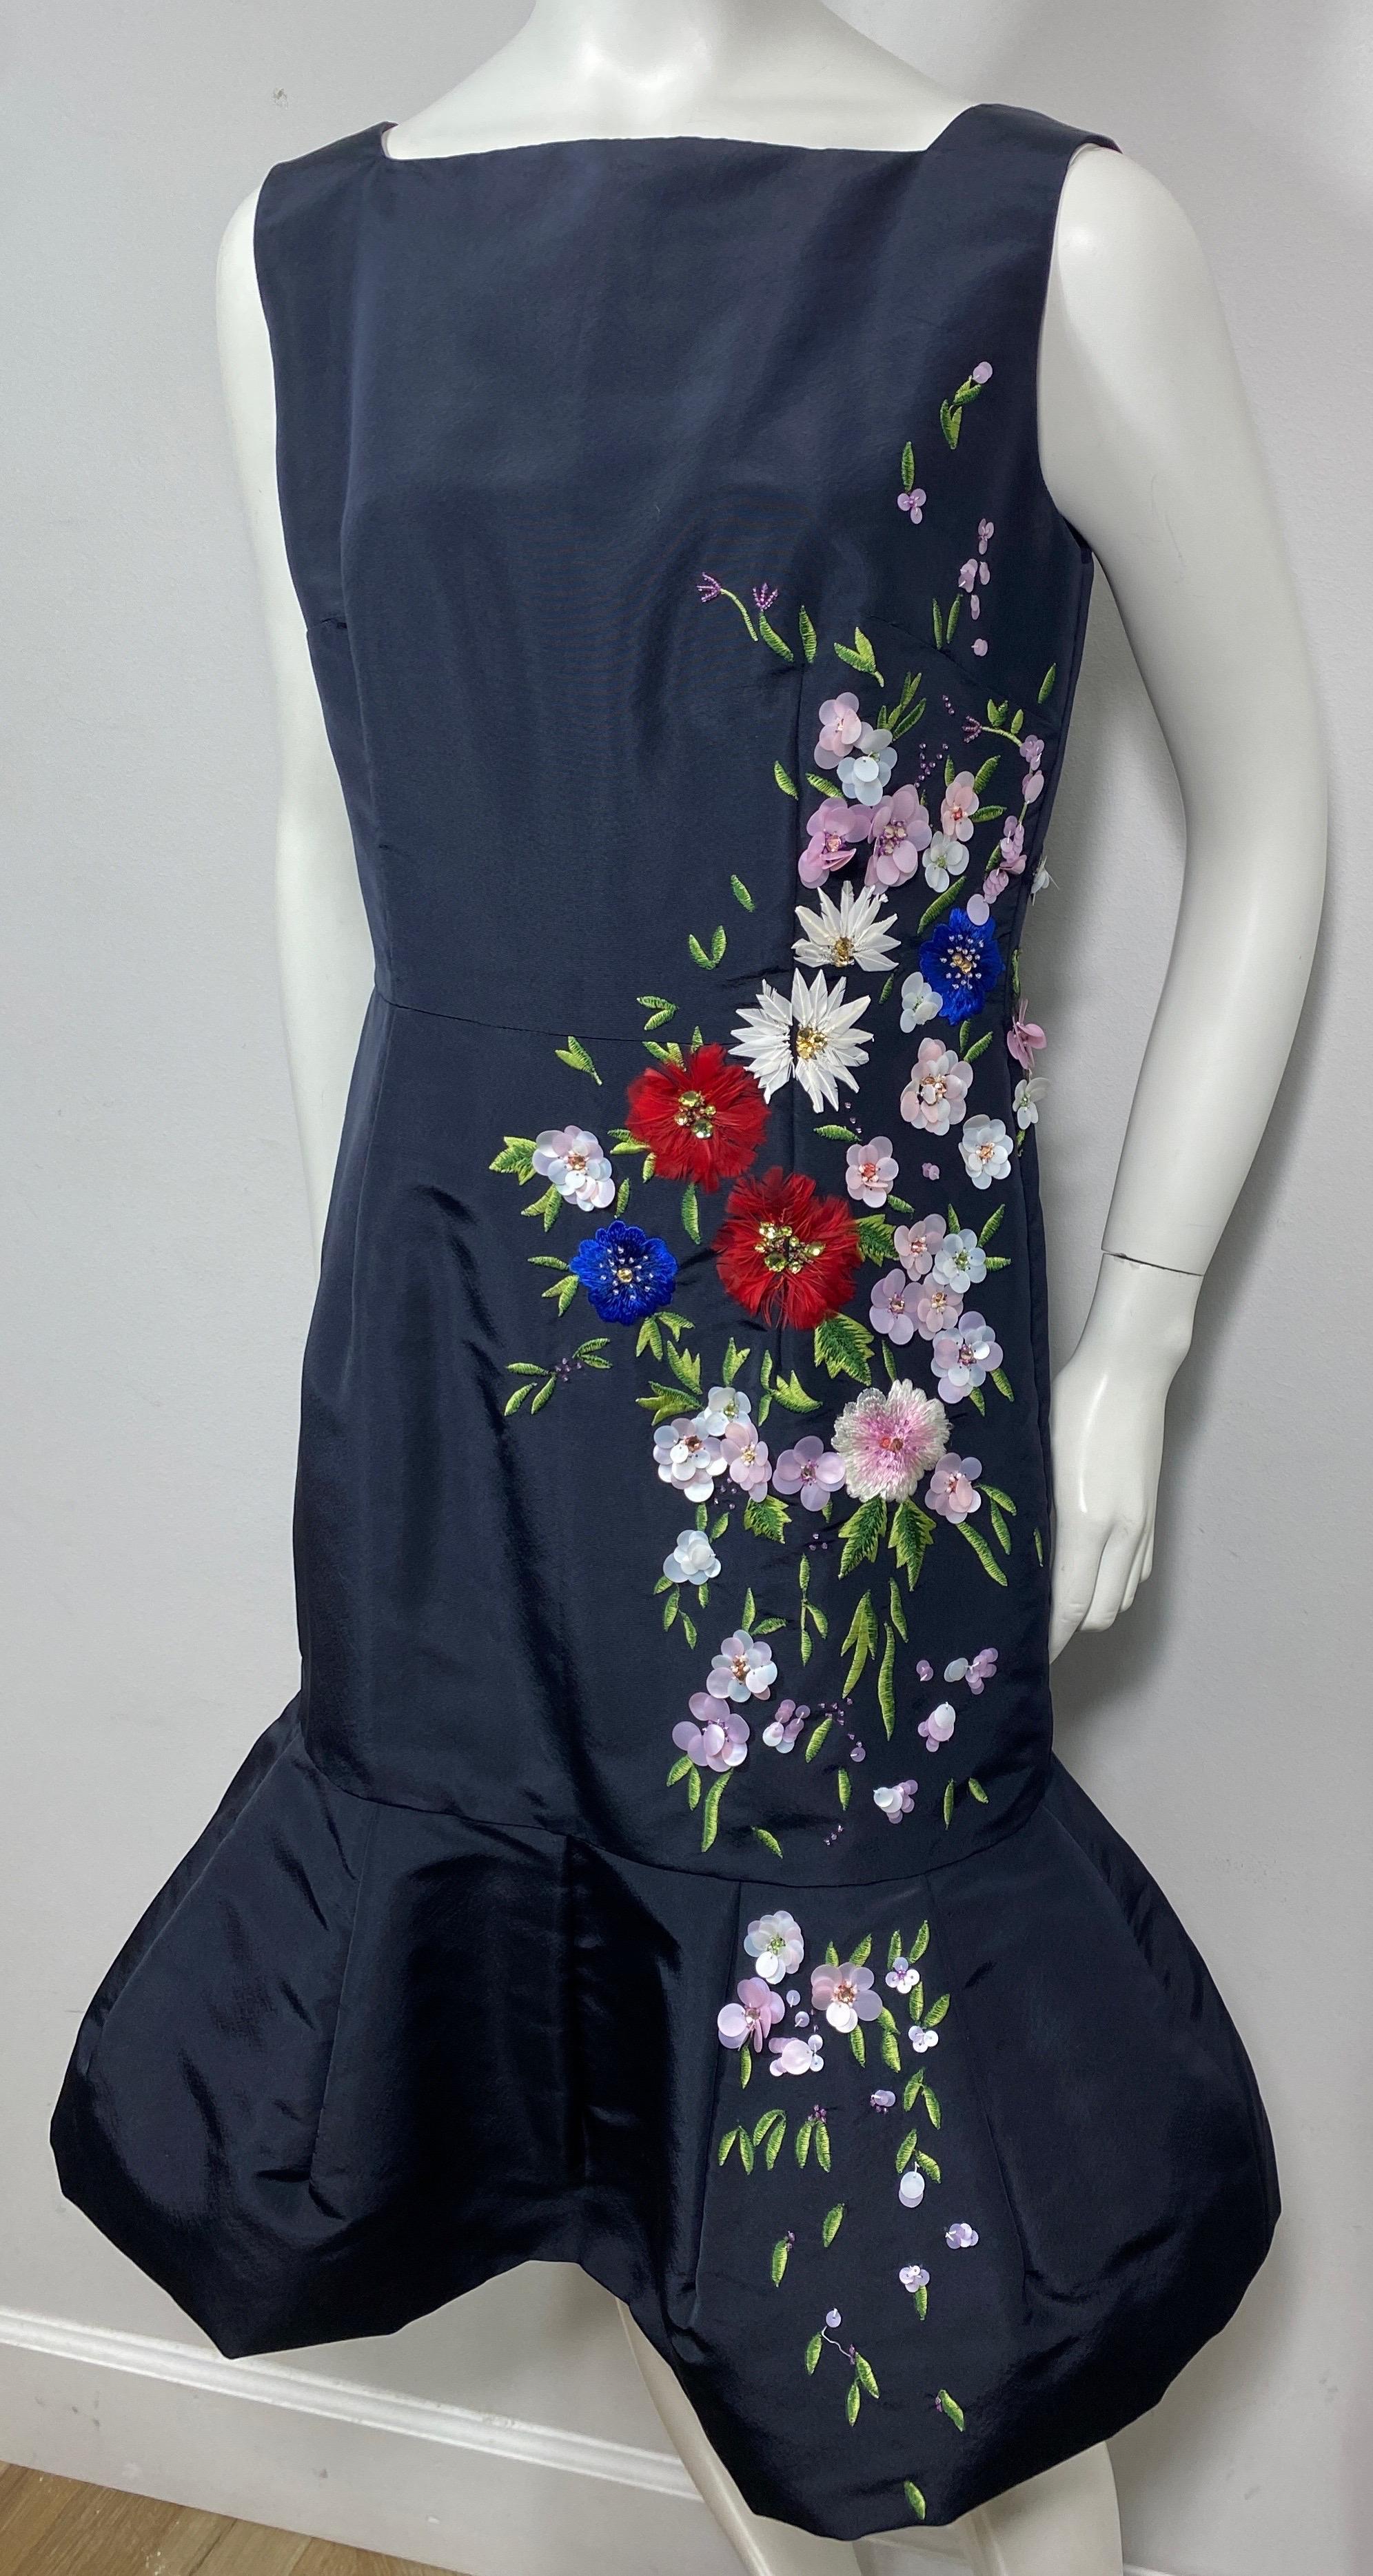 Oscar de la Renta Runway 2015 Spring Navy Silk Floral Applique Dress-Size 10  This stunning Navy Silk Faille Dress is sleeveless, has a Square neckline with 2